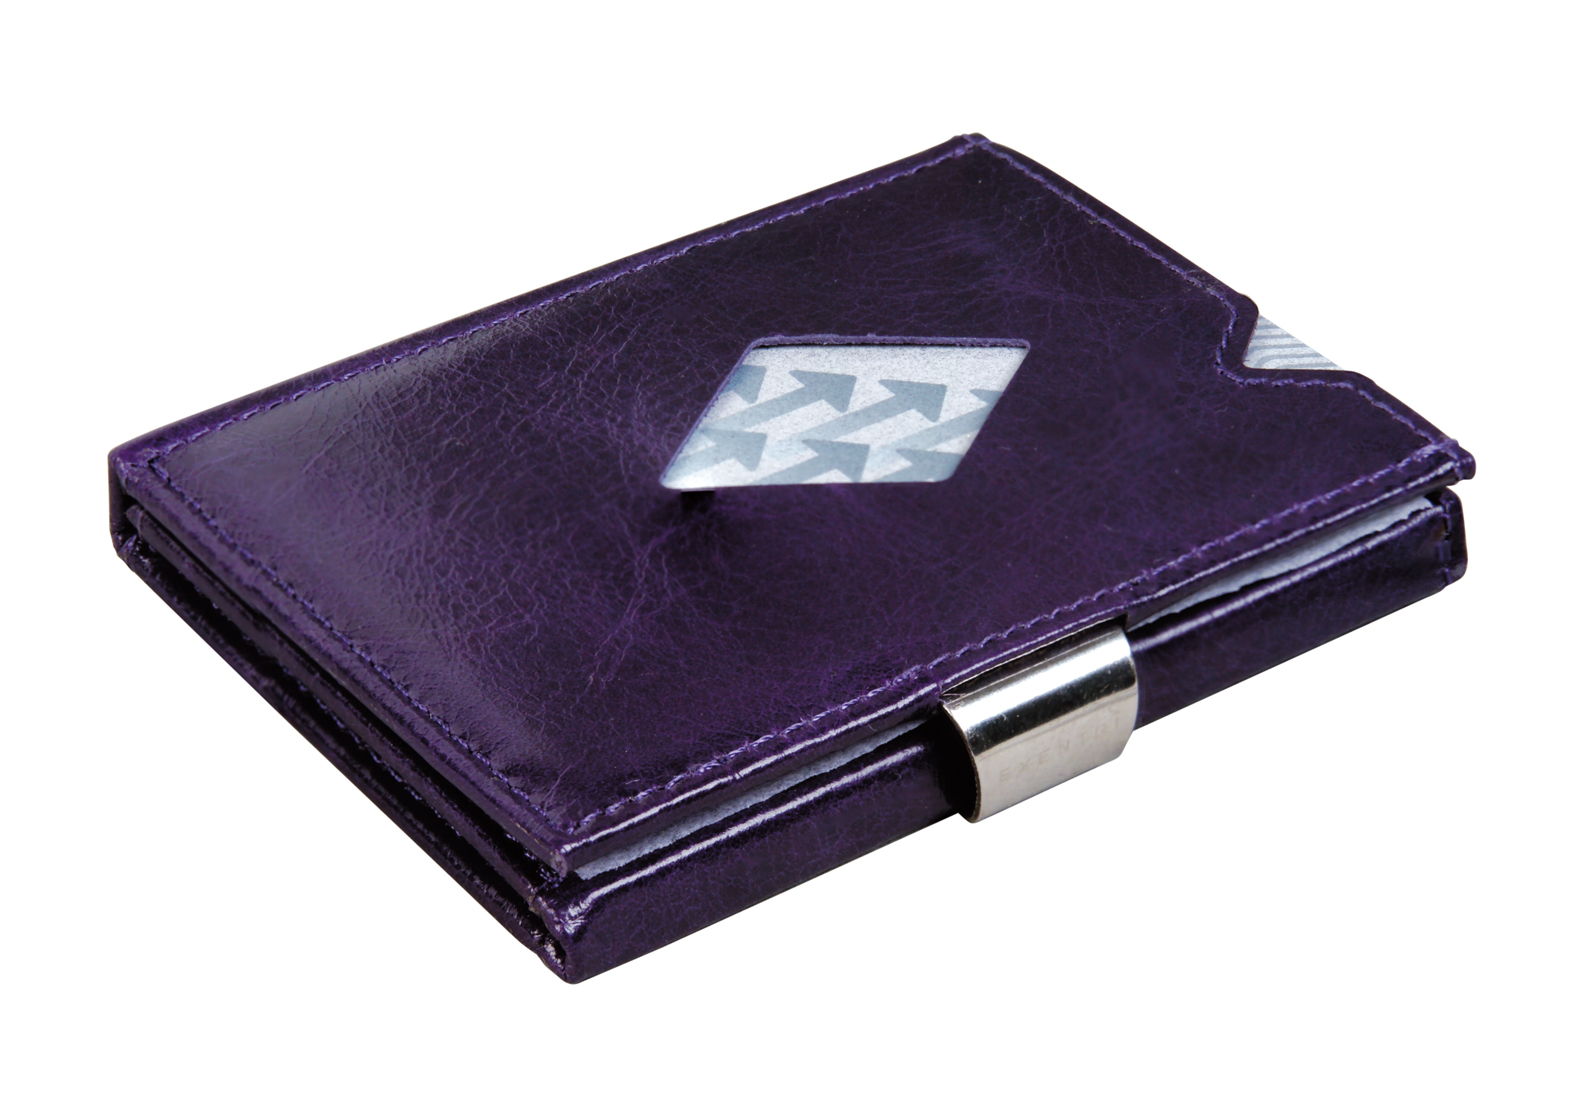 Exentri Purple Haze Smart plånbok/korthållare